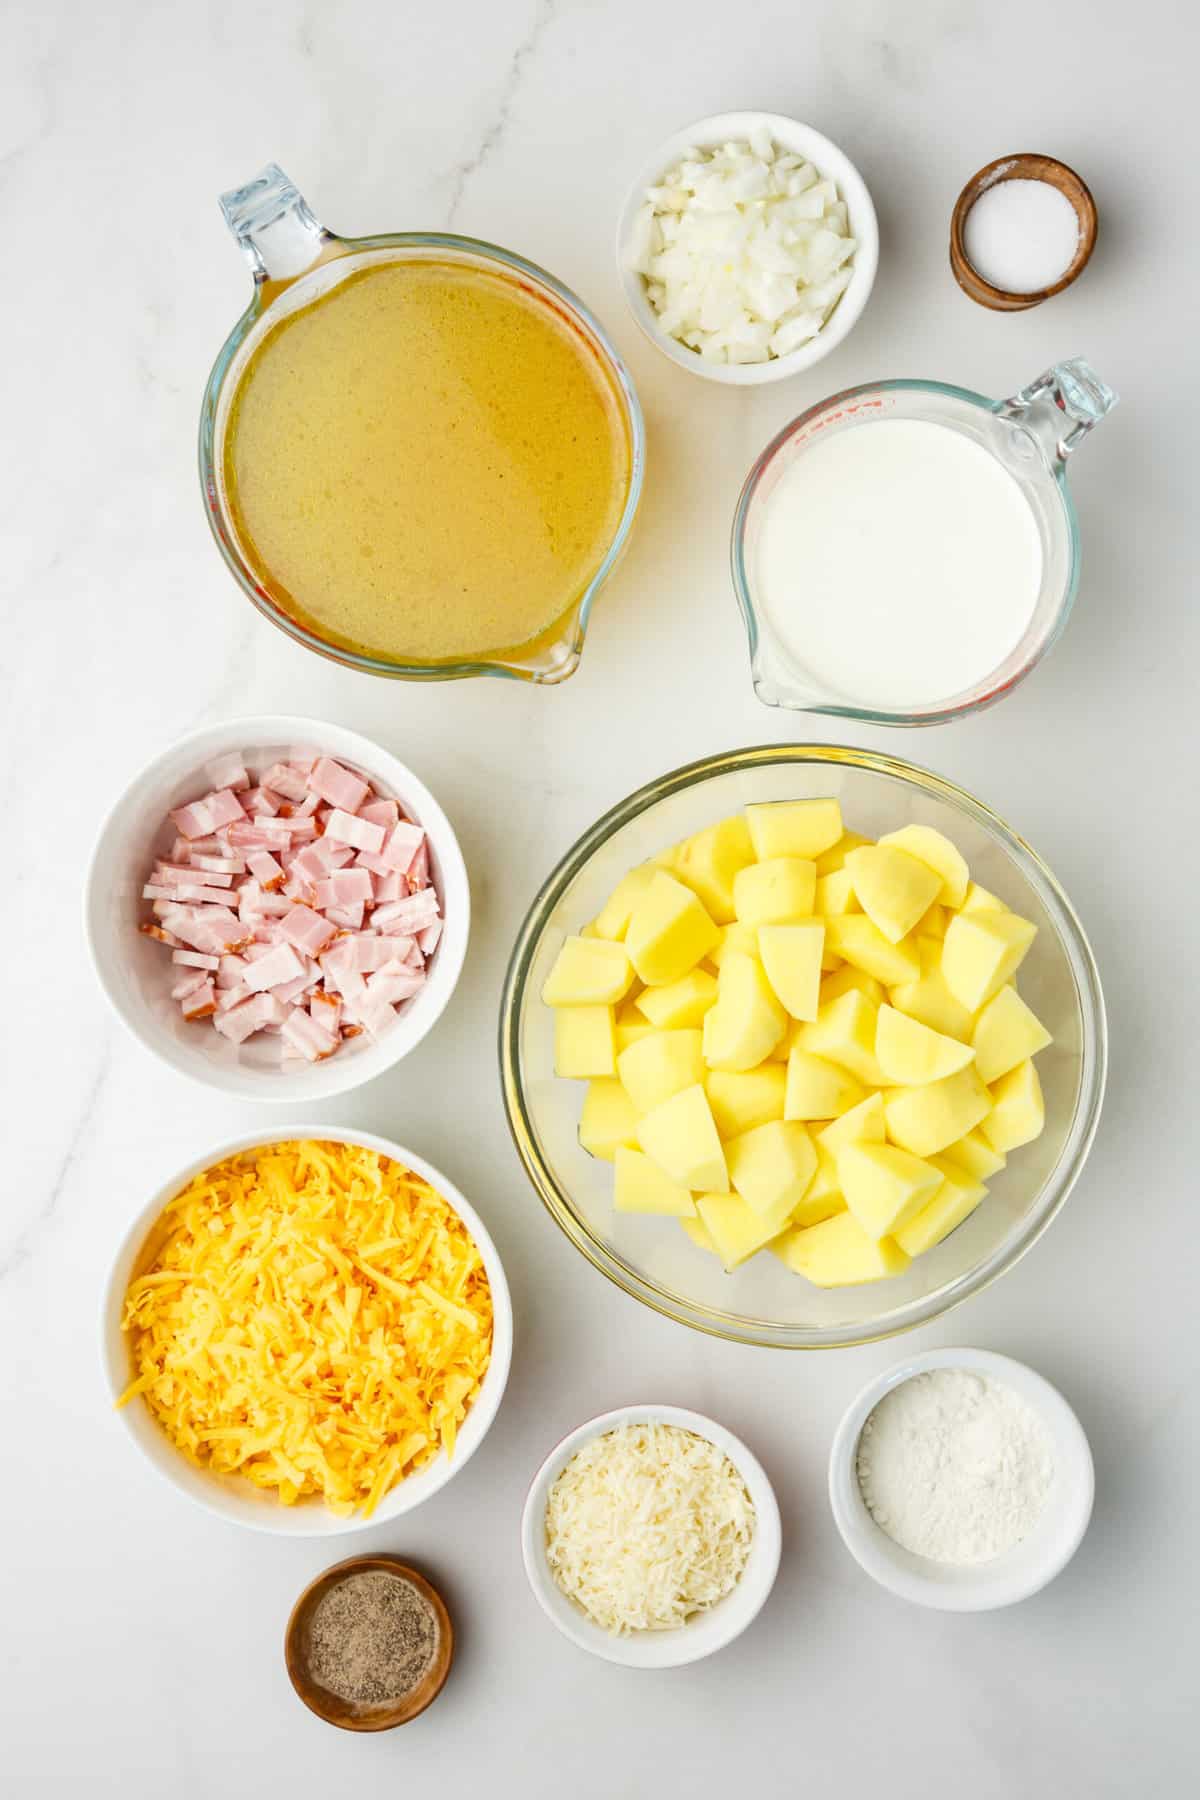 ingredients to make cheesy potato soup.